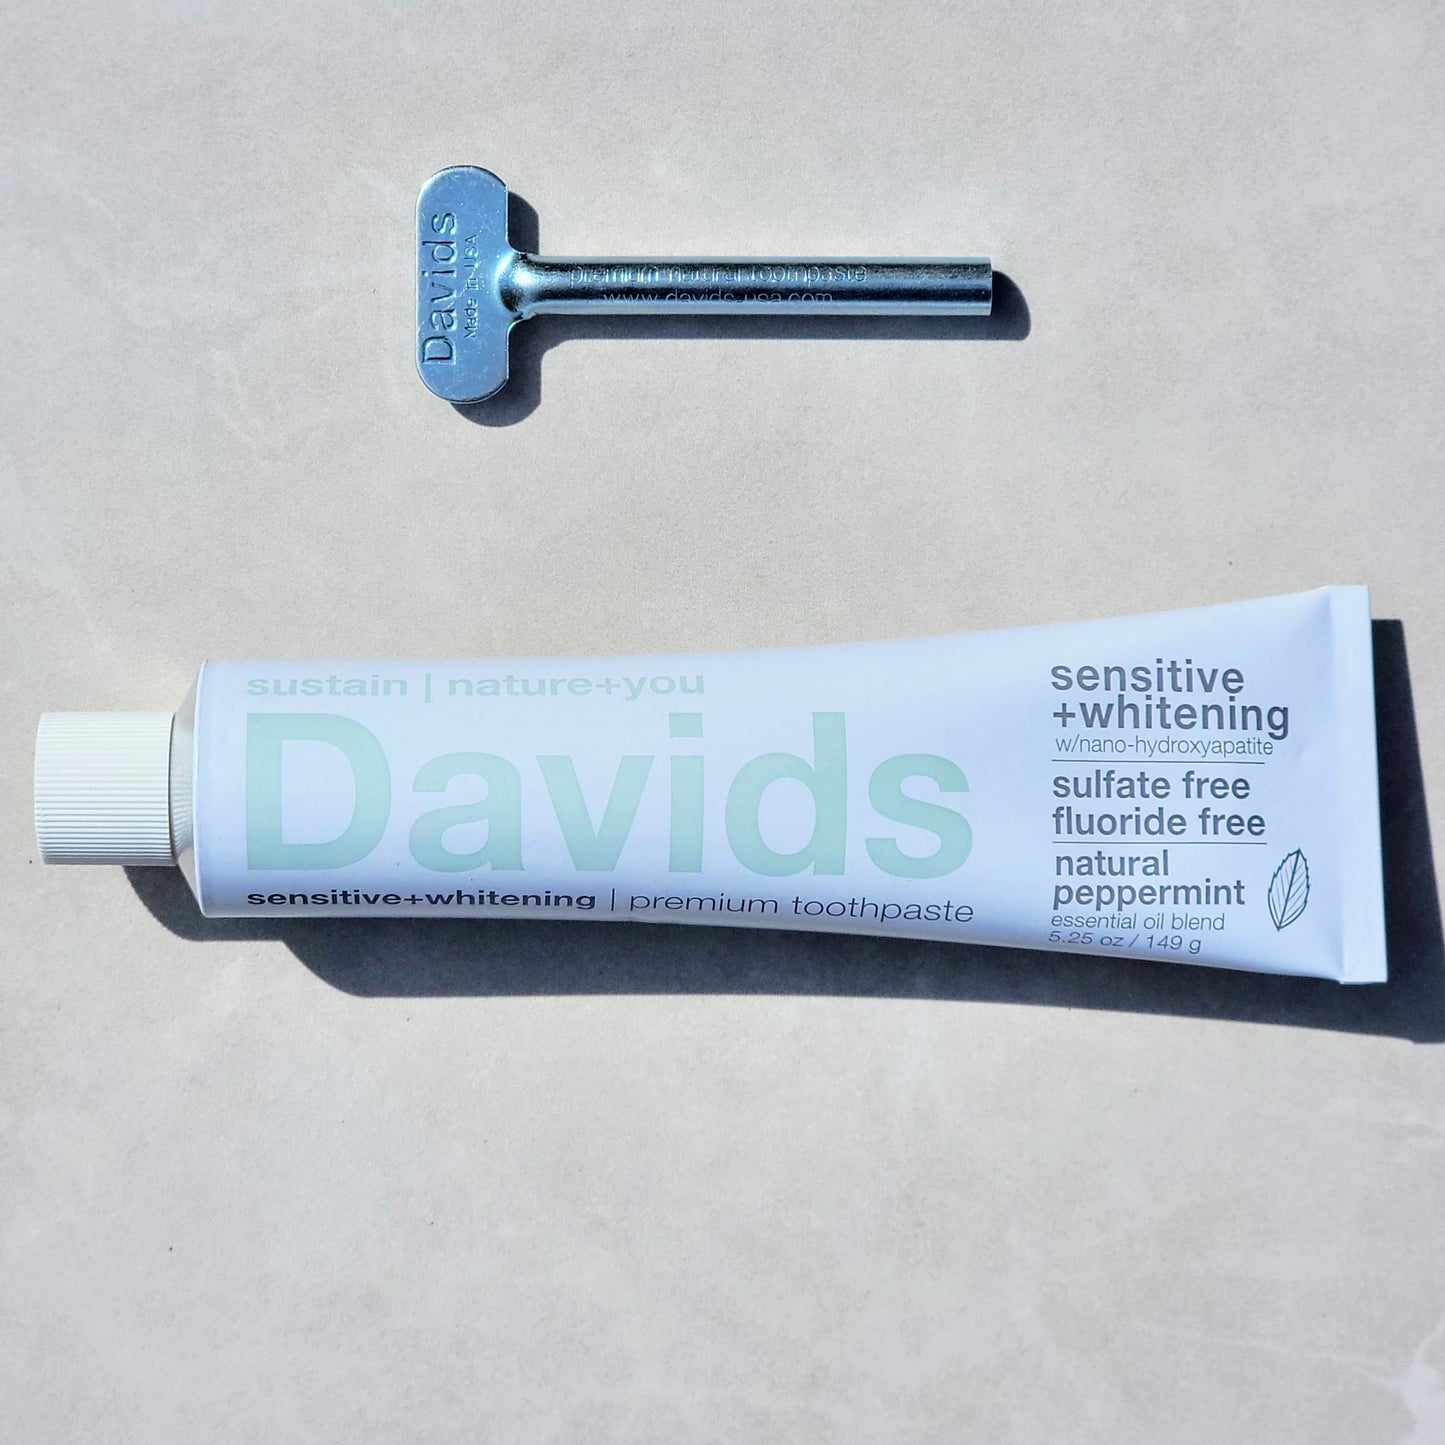 Davids Toothpaste | Sensitive + Whitening